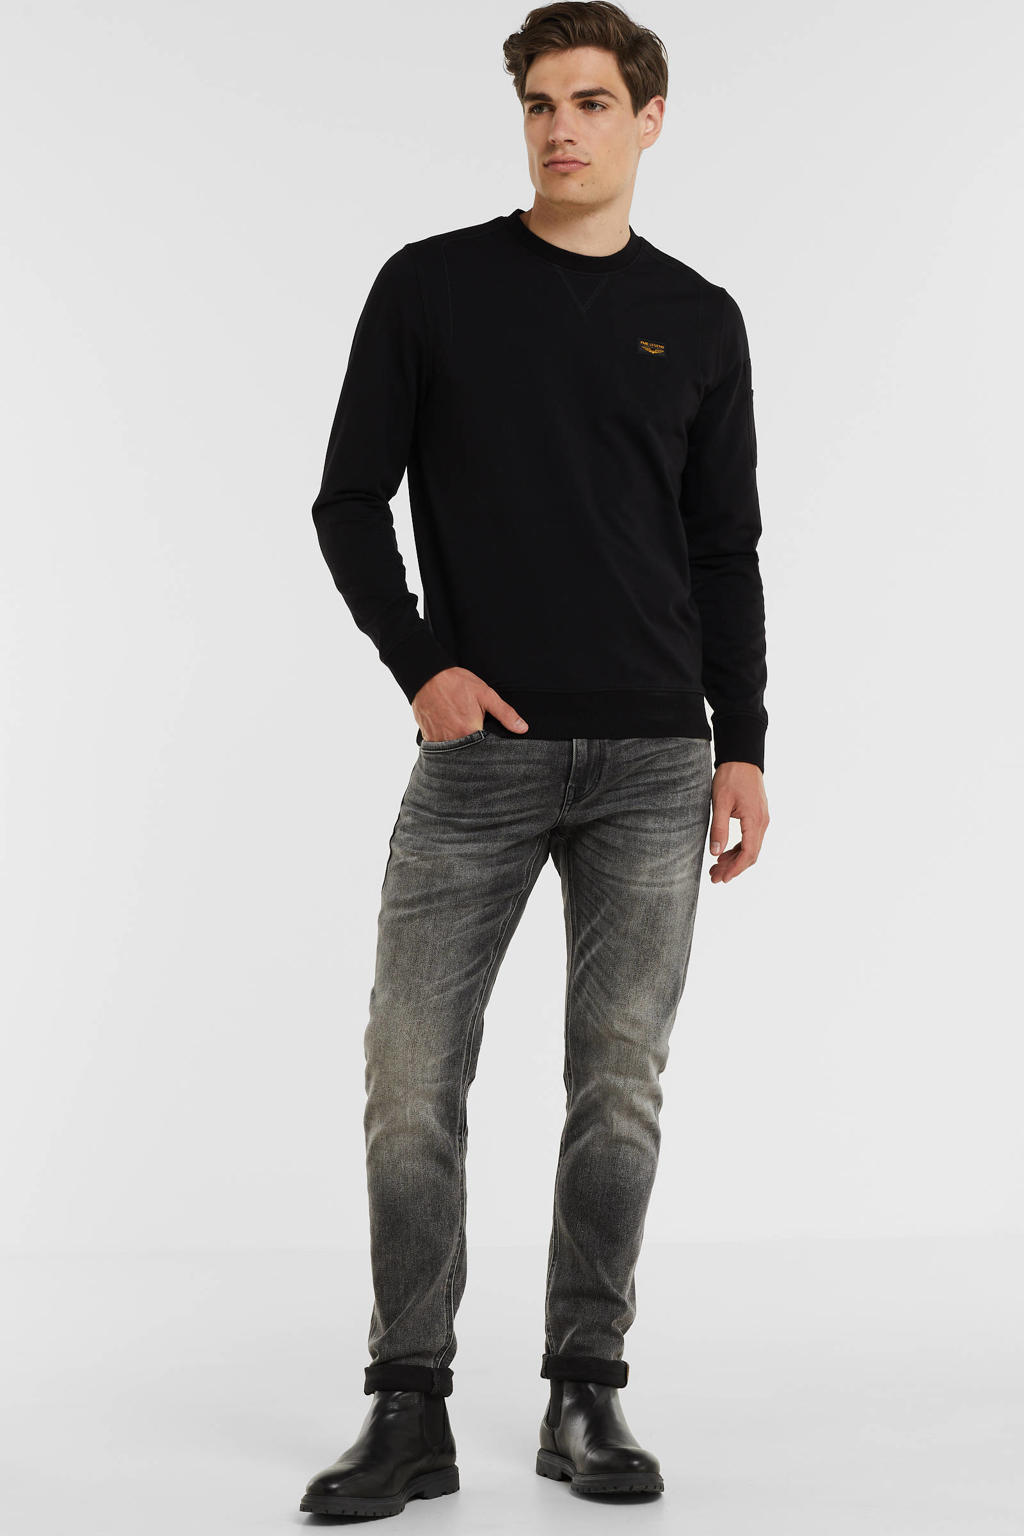 PME Legend slim fit jeans Tailwheel soft comfort grey